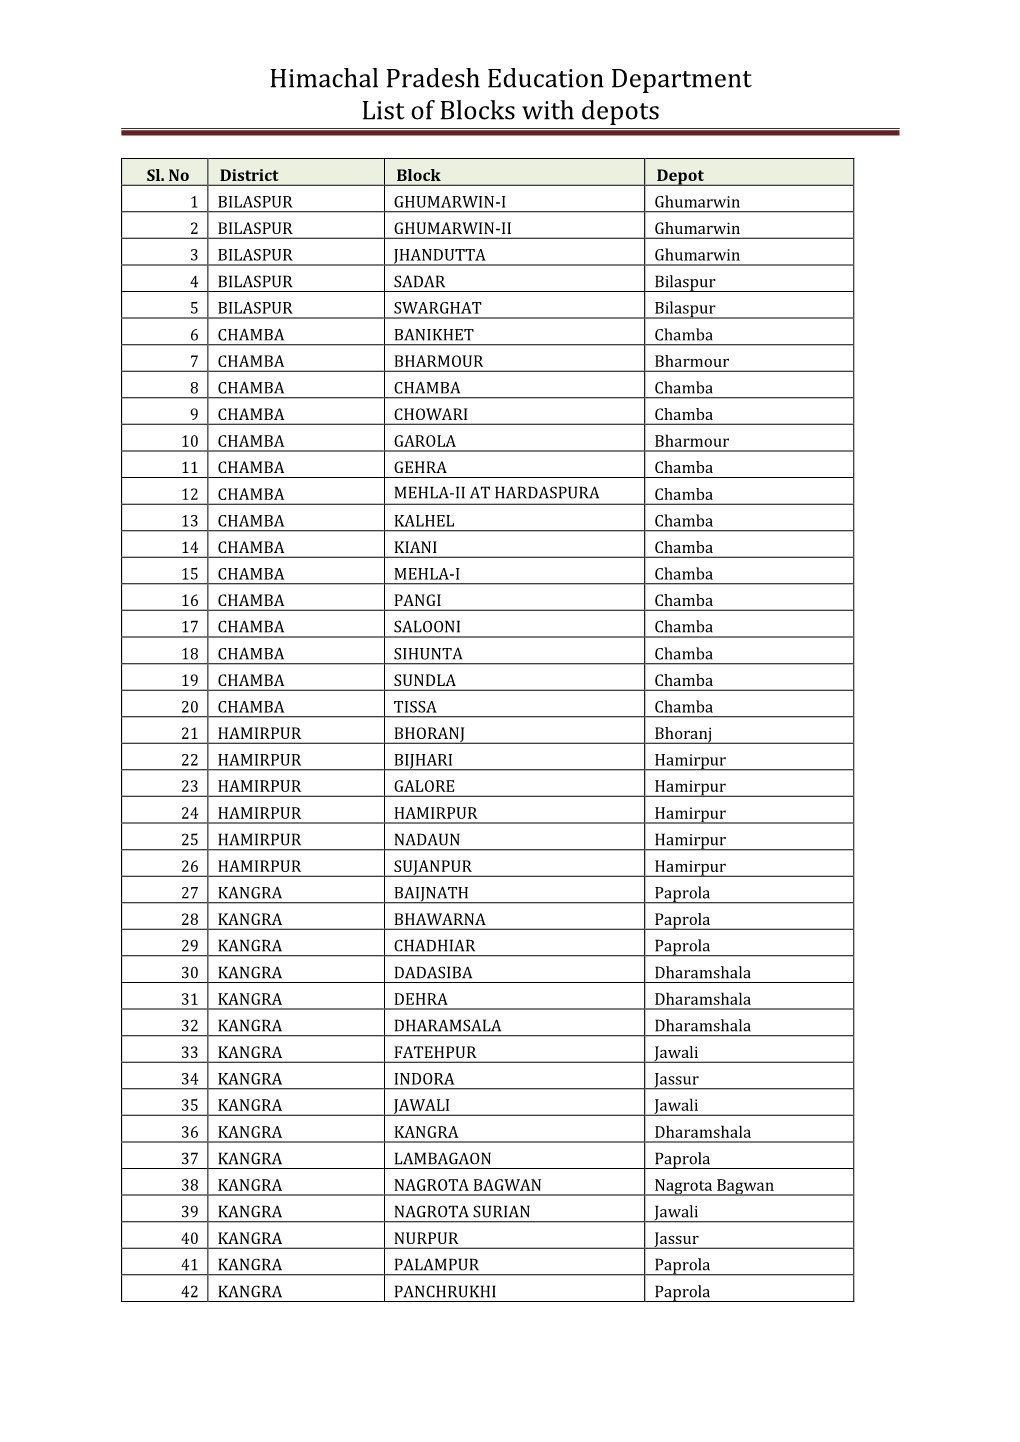 Himachal Pradesh Education Department List of Blocks with Depots